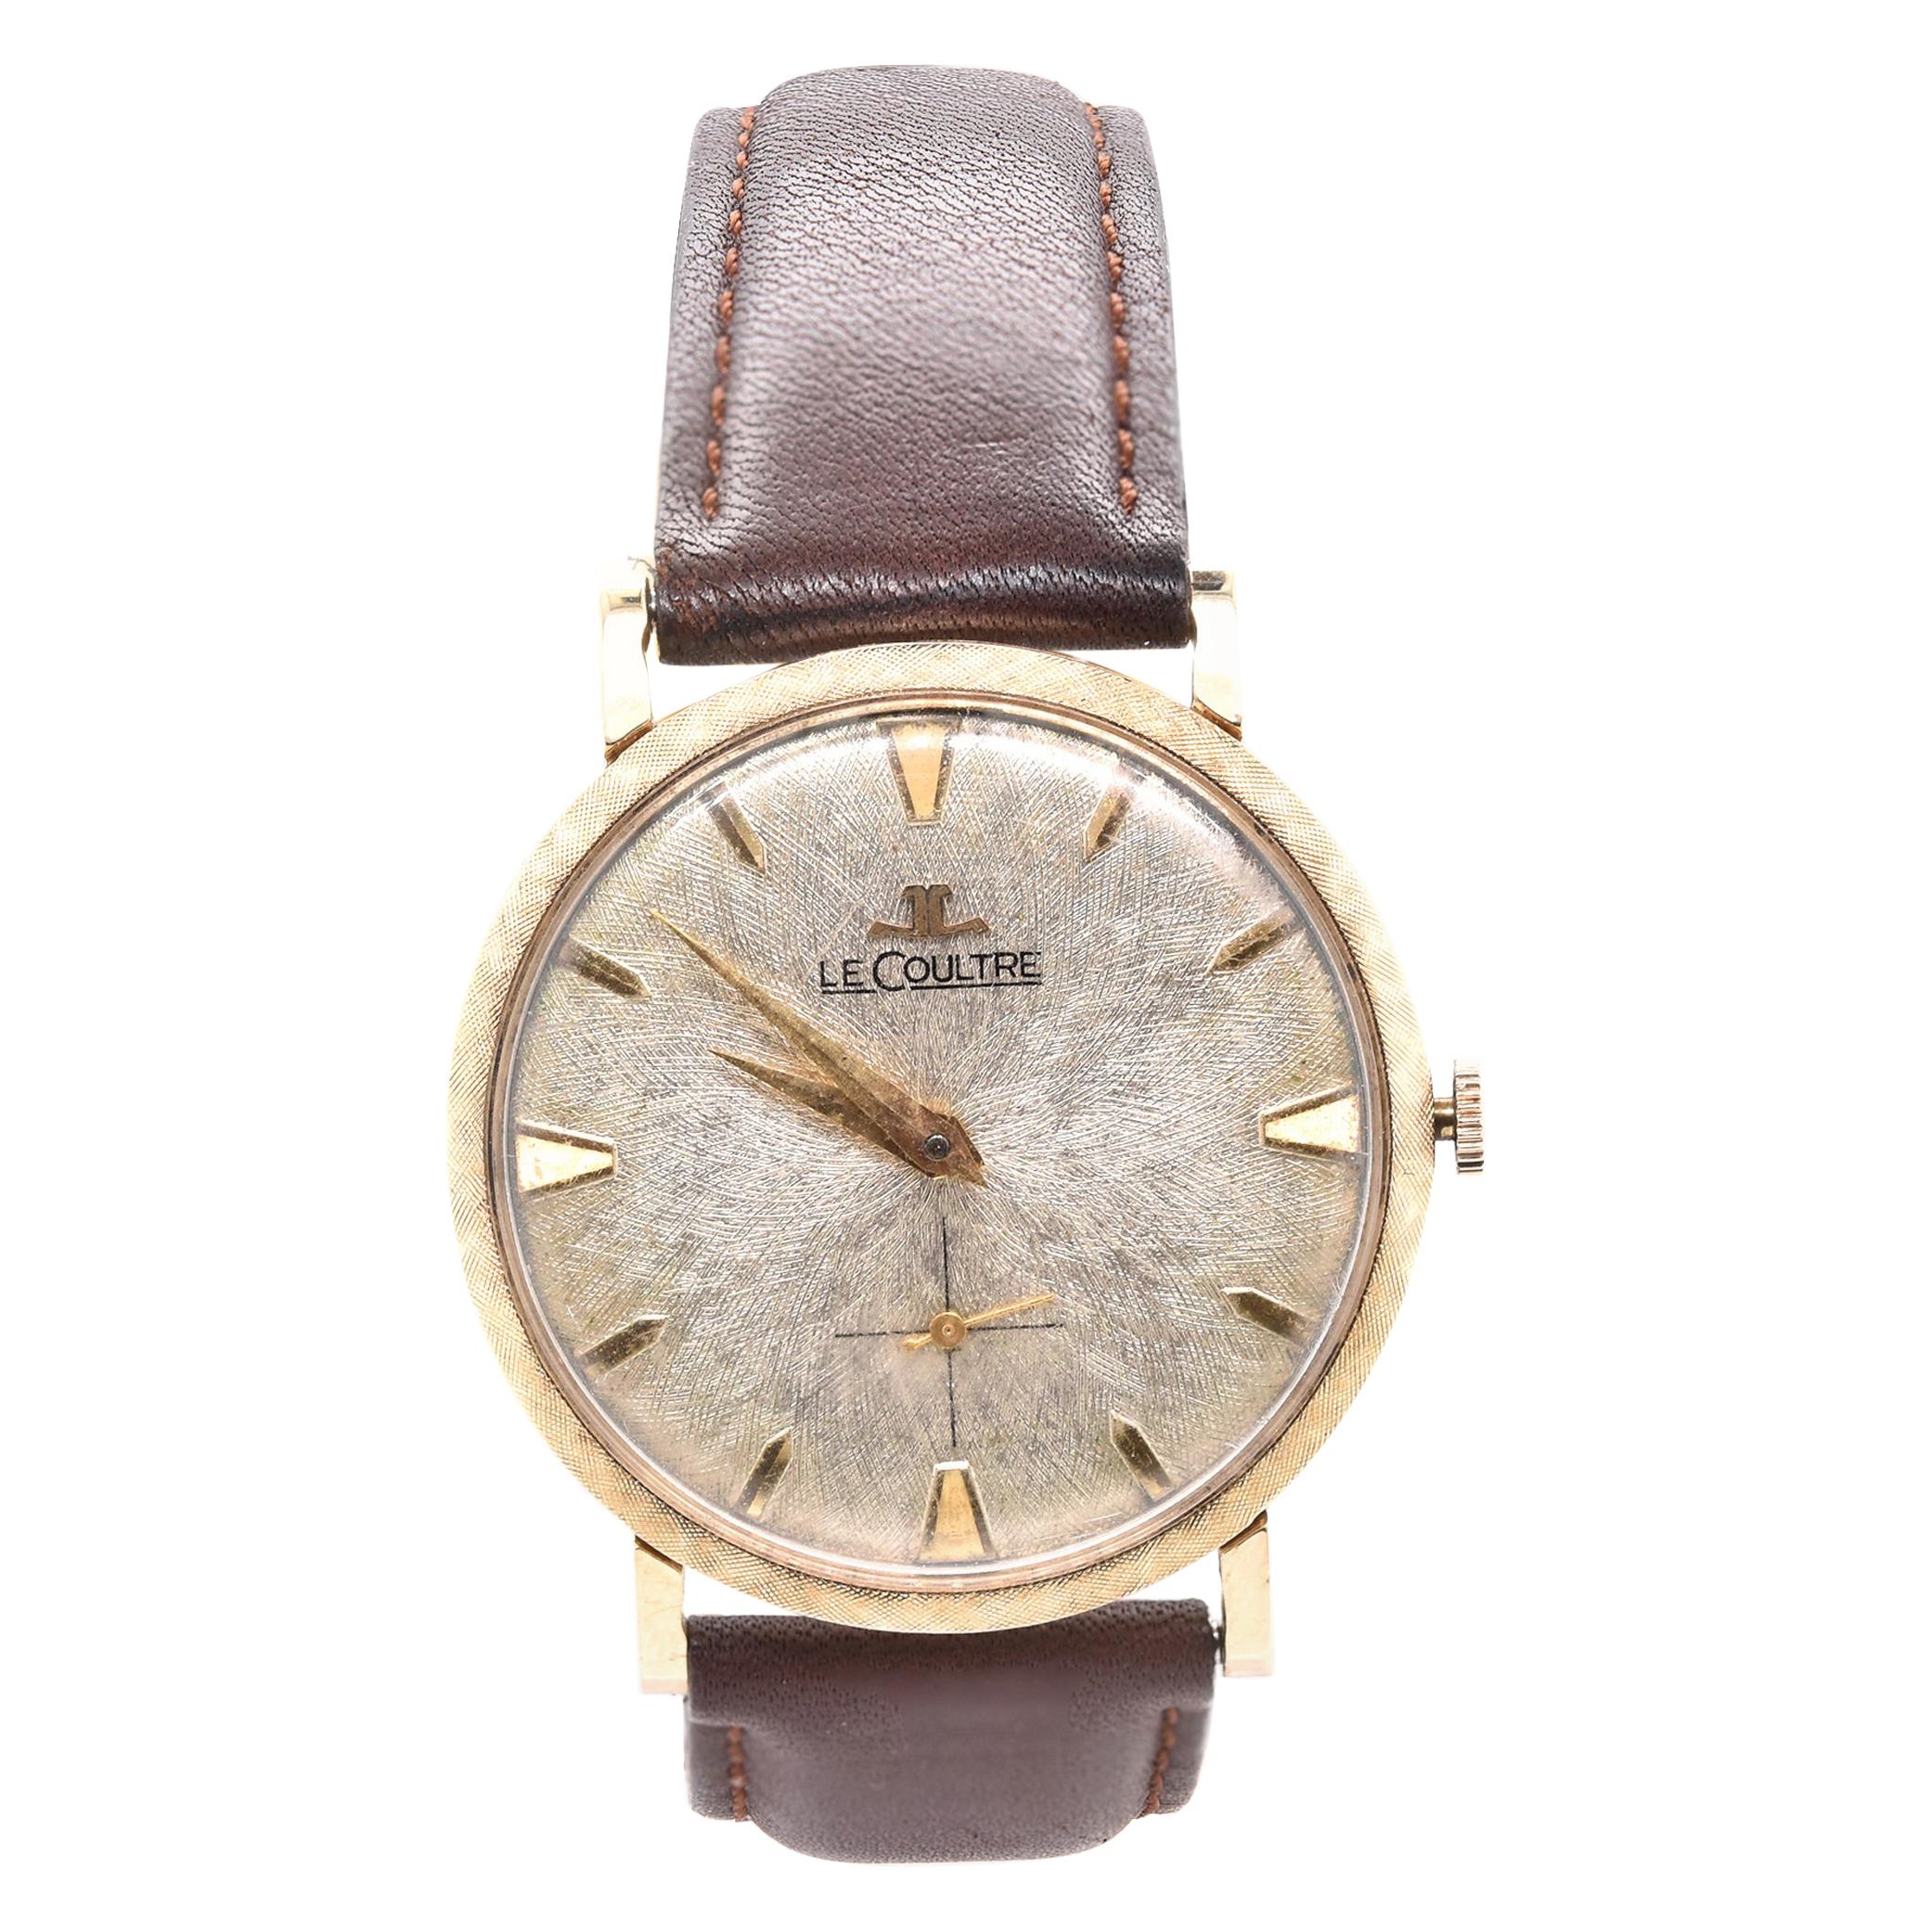 Jaeger-LeCoultre Vintage 14 Karat Yellow Gold Gents Wrist Watch